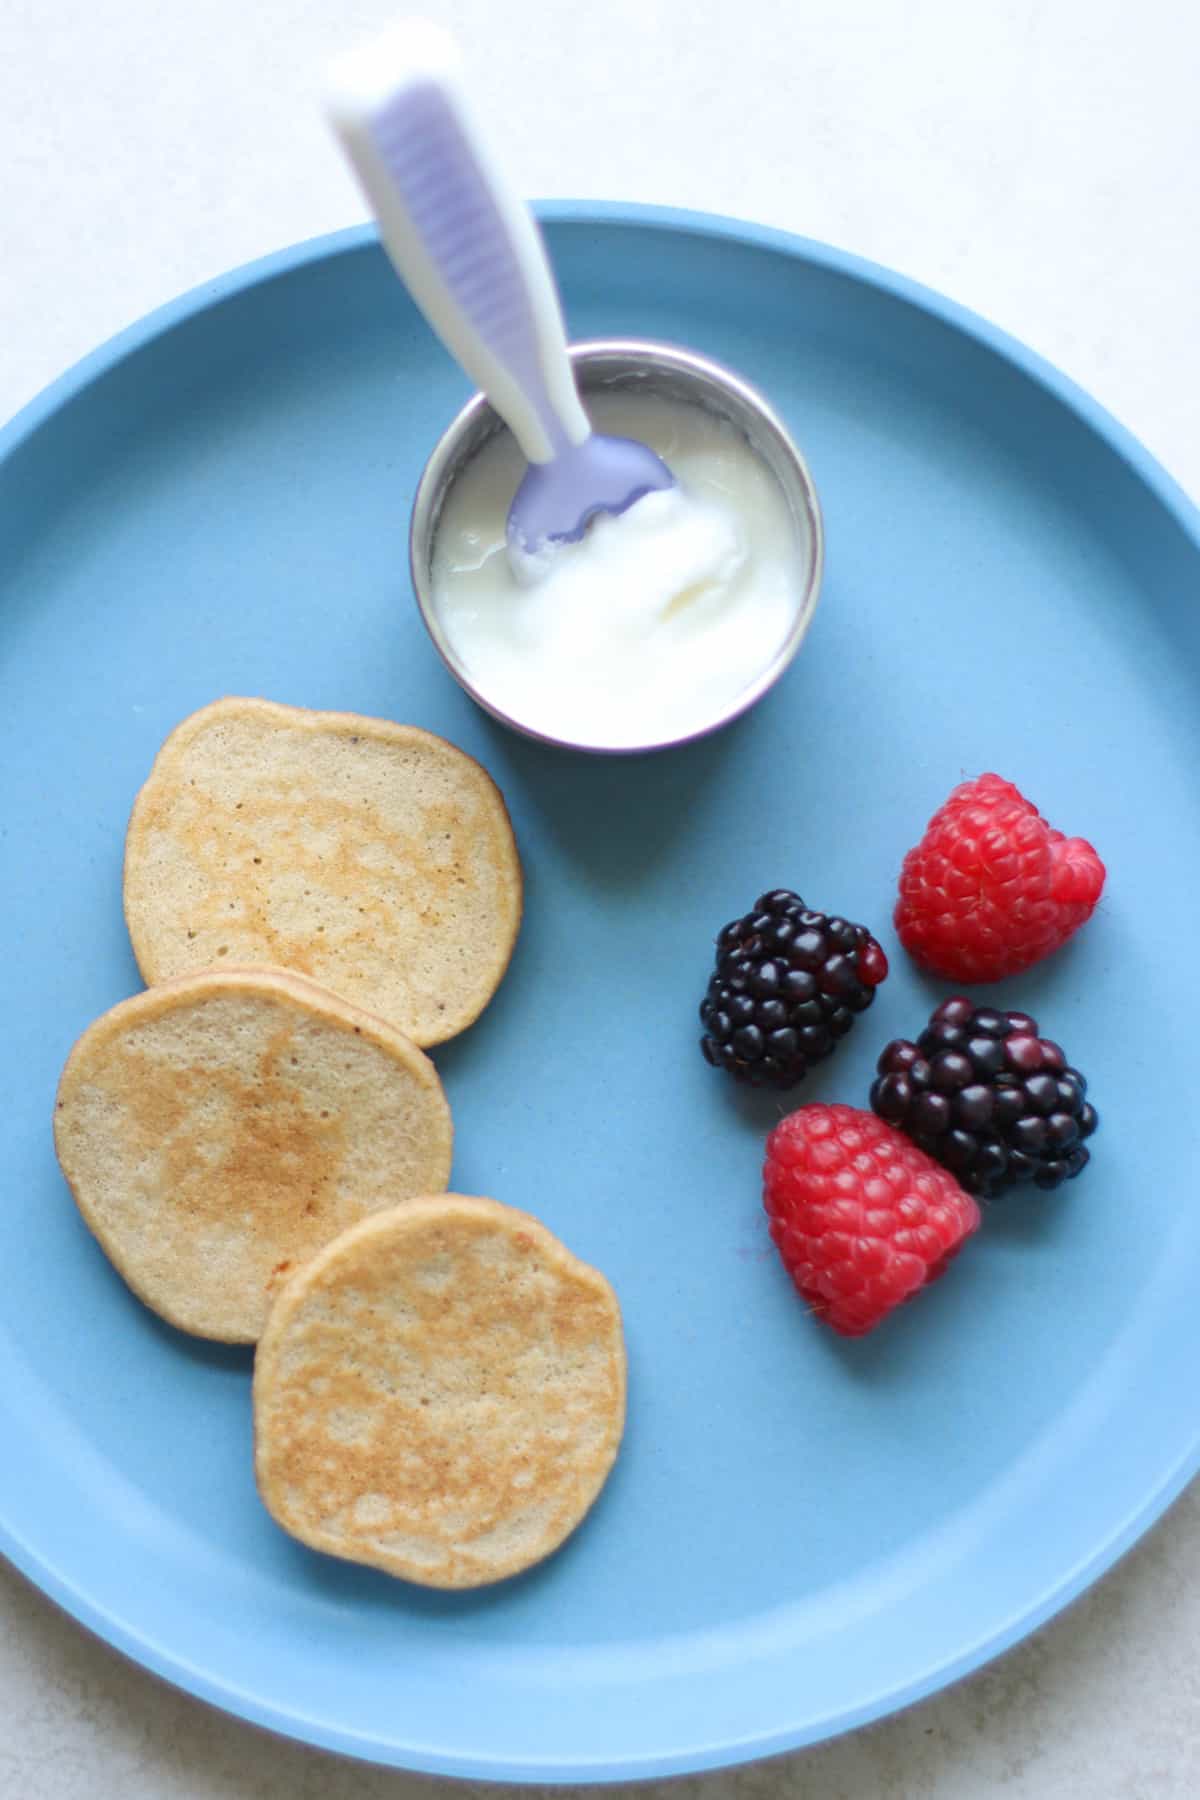 Three banana oat pancakes with yogurt and berries on baby's plate.